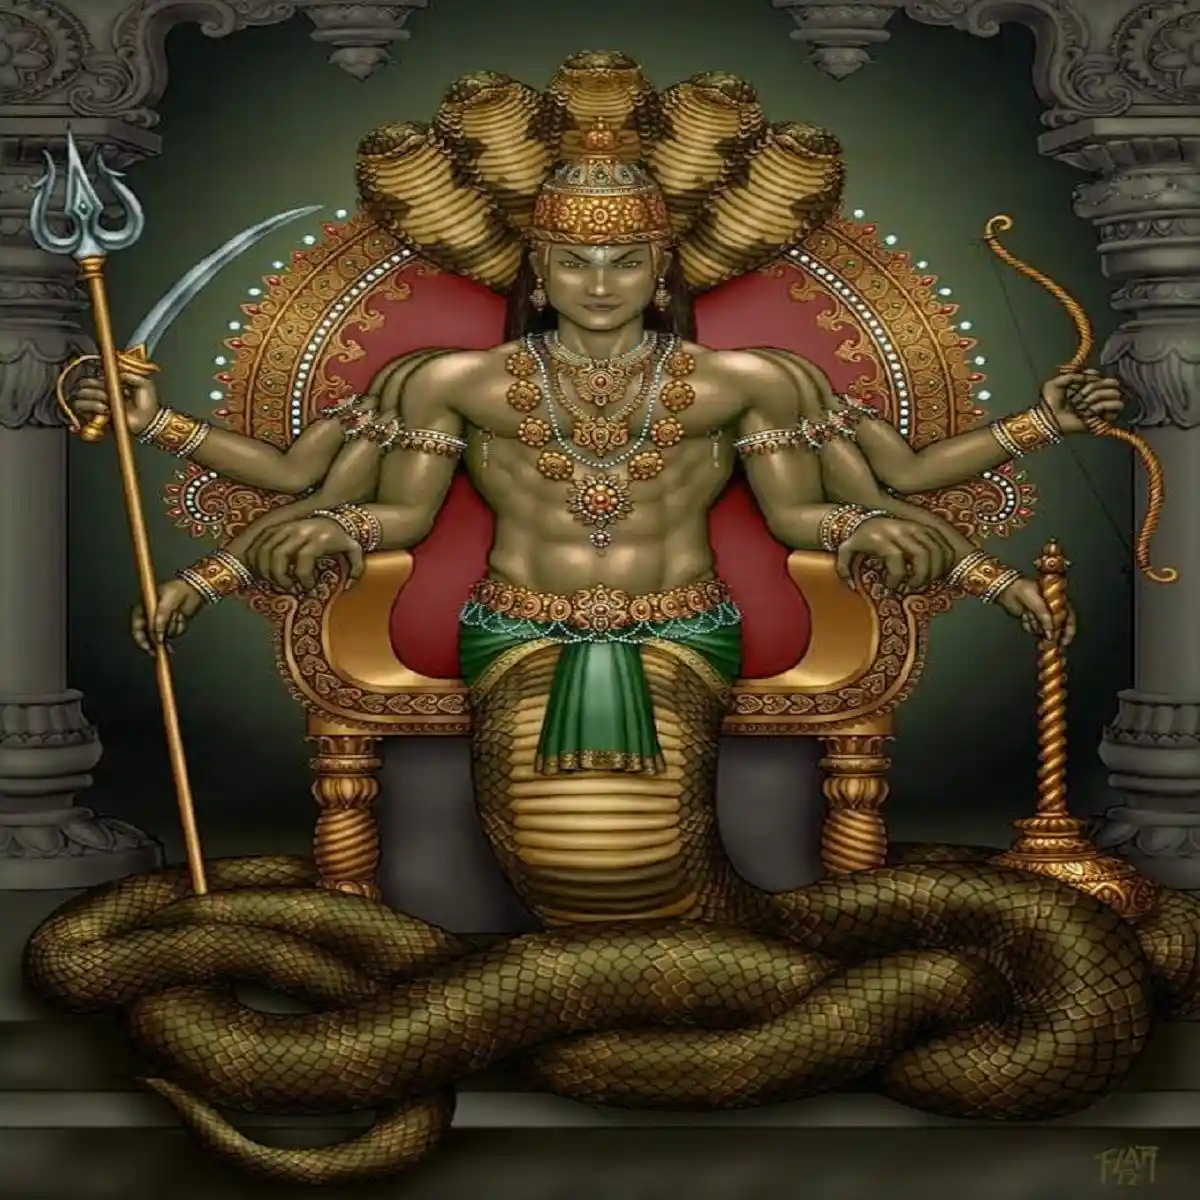 Shesha Naga, the king of the snake clan, Image source- Pinterest.com